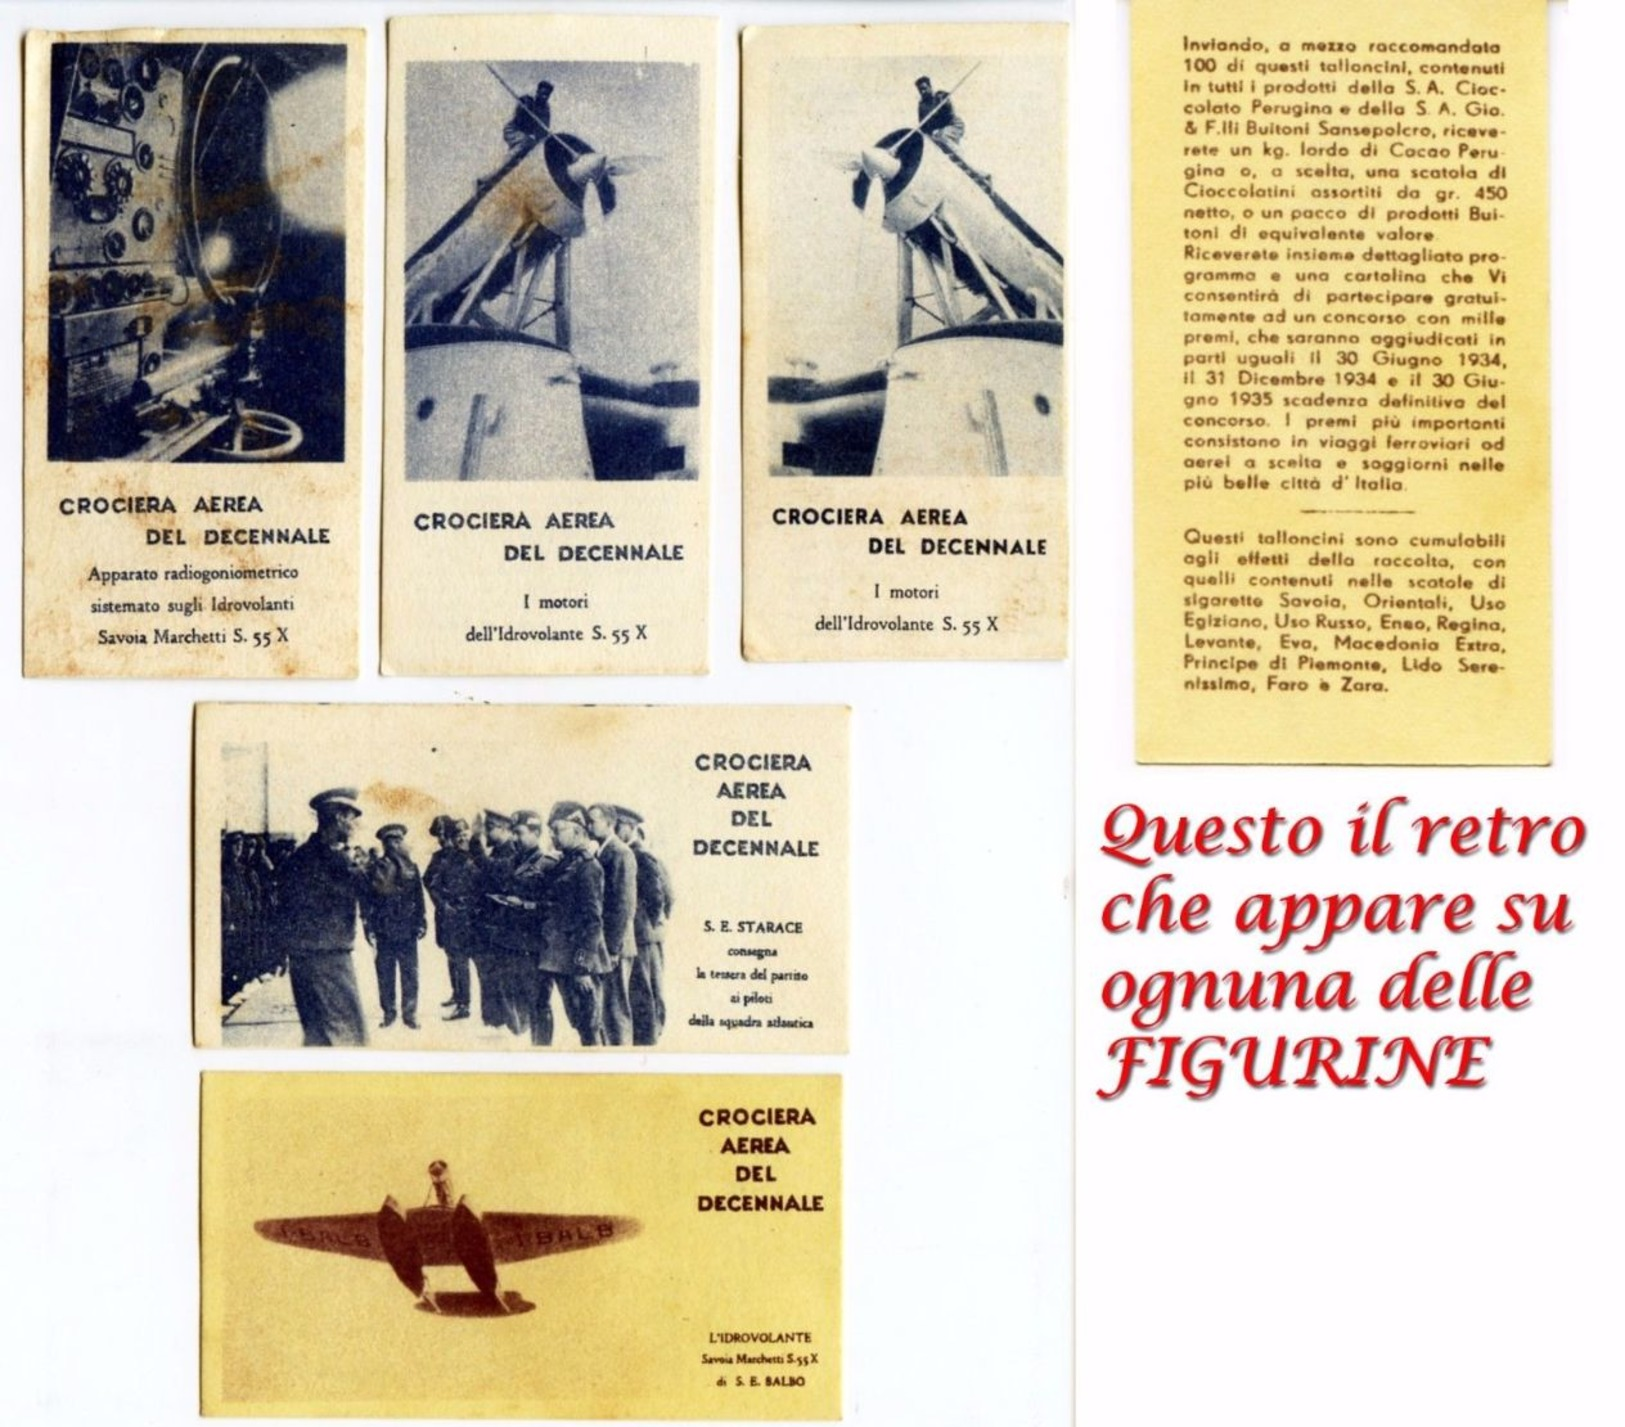 210> CROCIERA AEREA DEL DECENNALE Rarissime Figurine Perugina - Fascio Fascismo Duce - 1934 - Documenti Storici